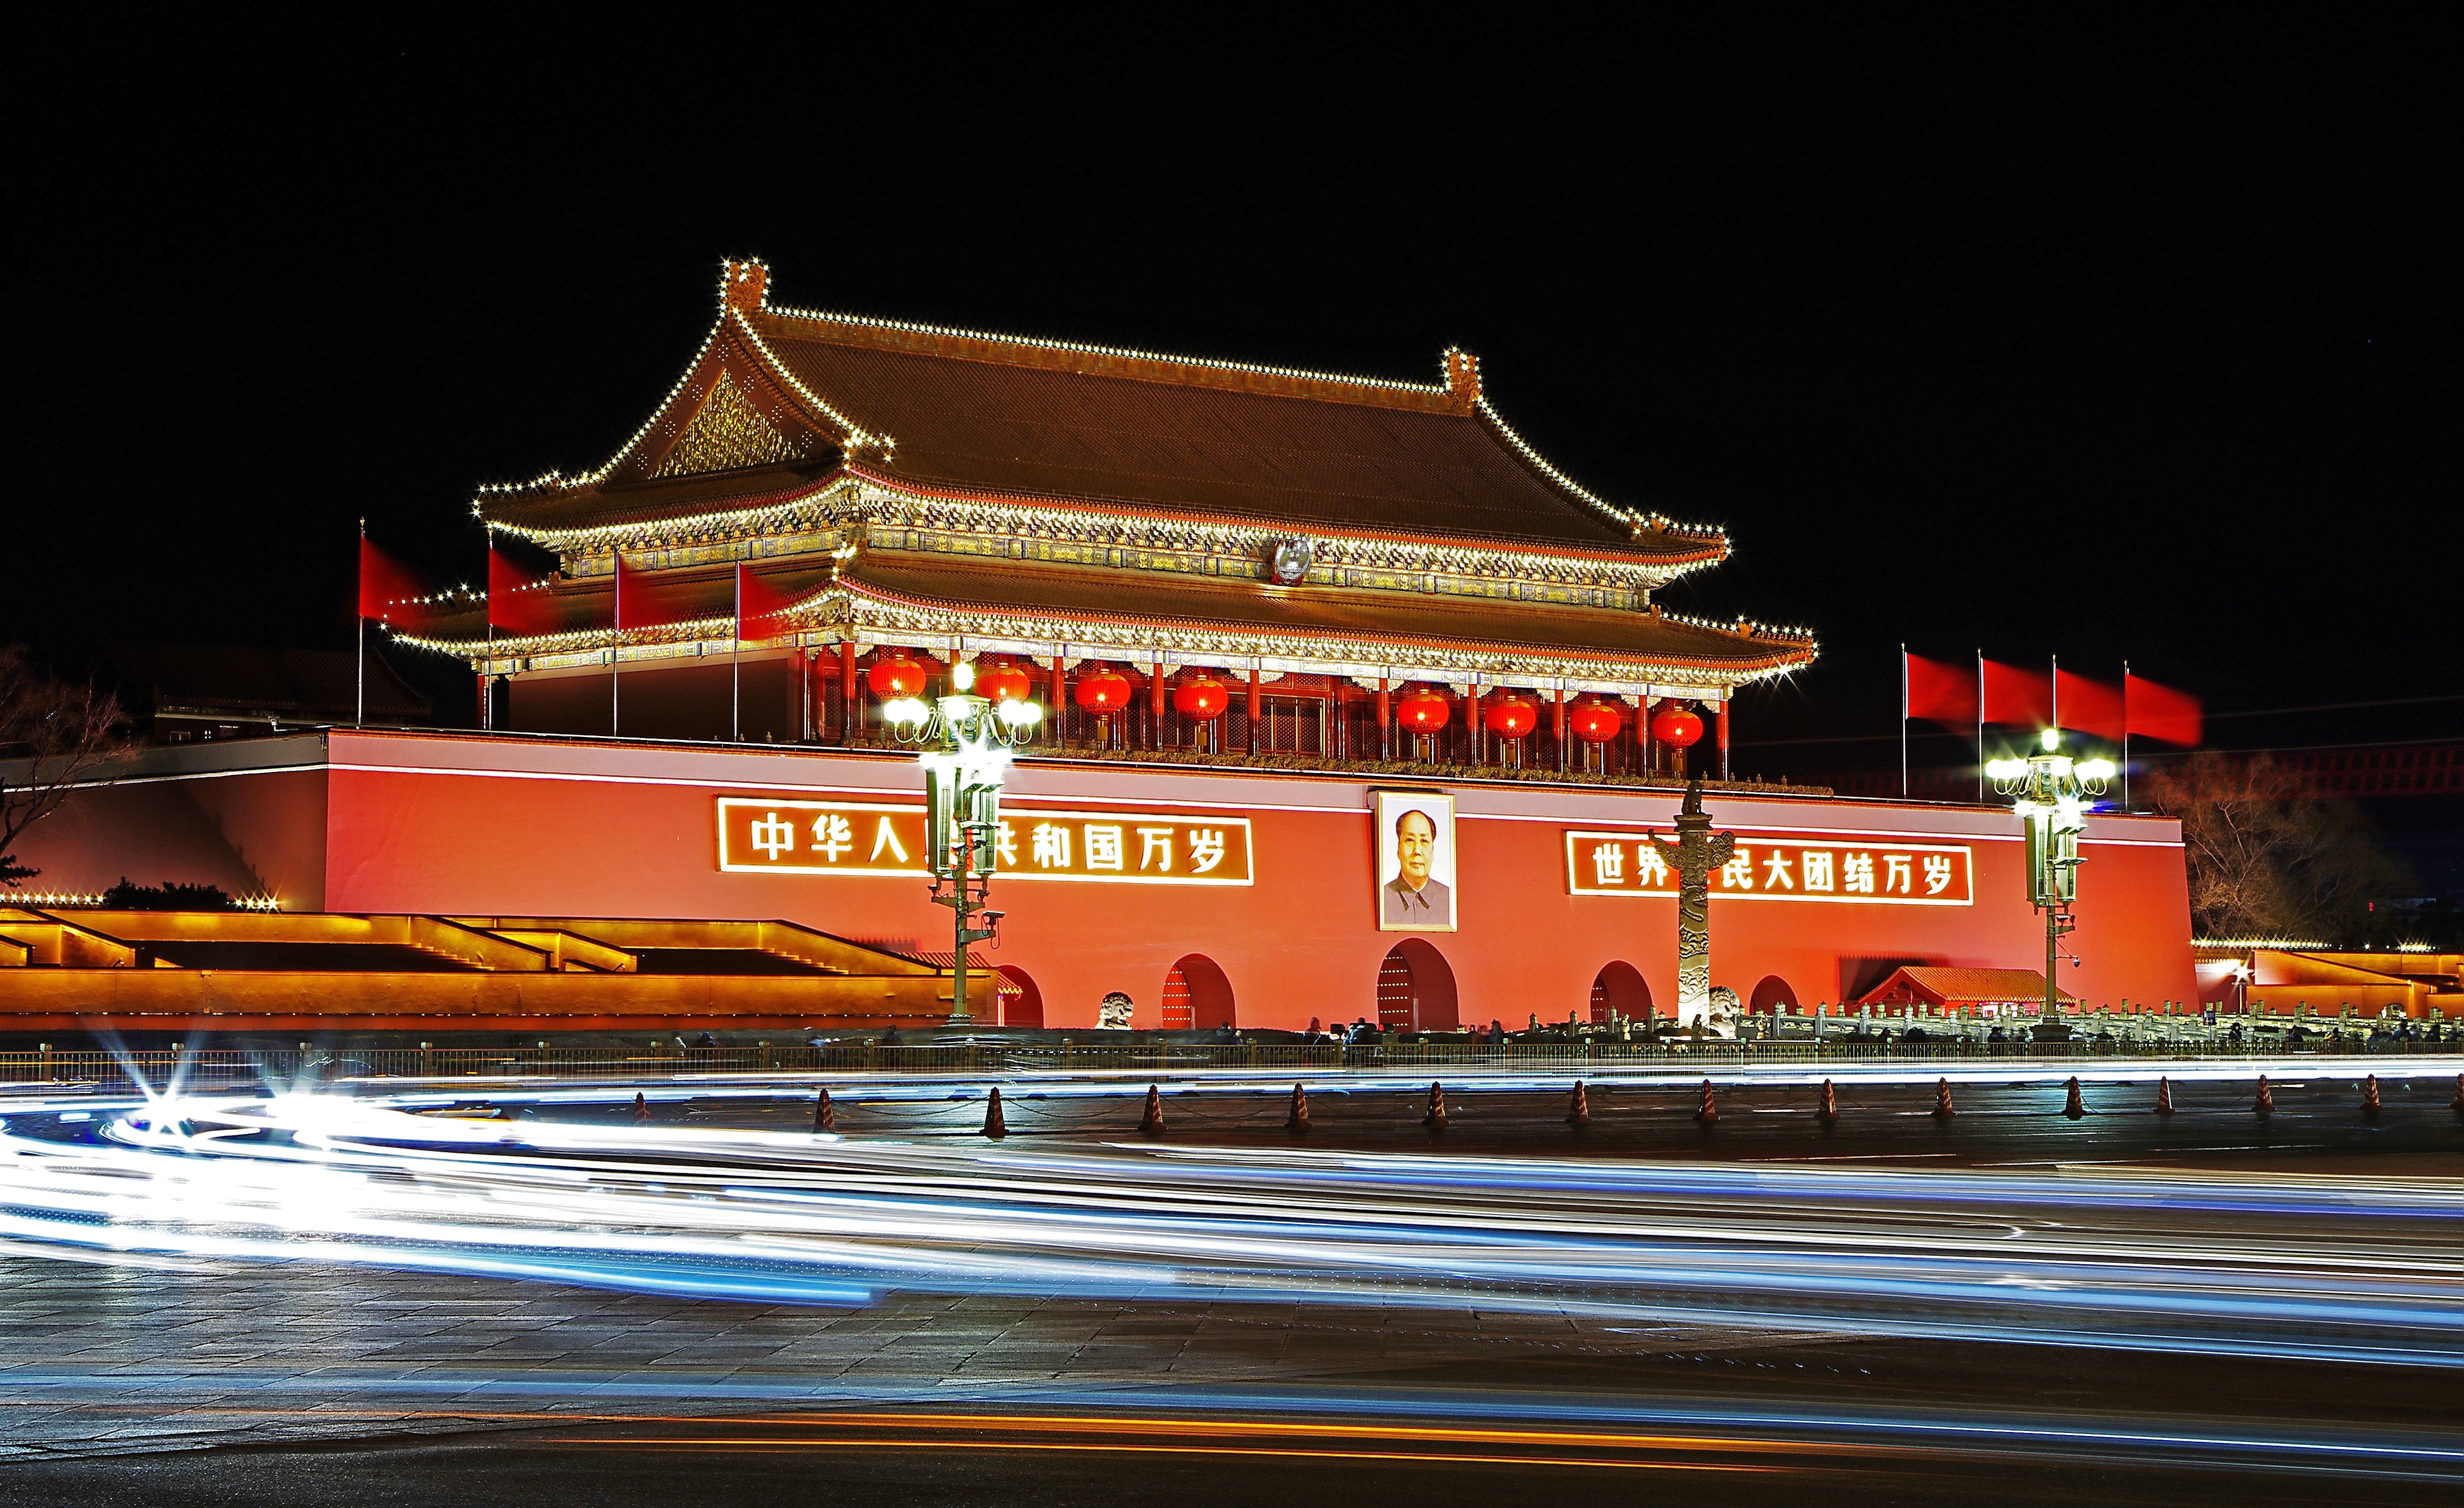 China Tours